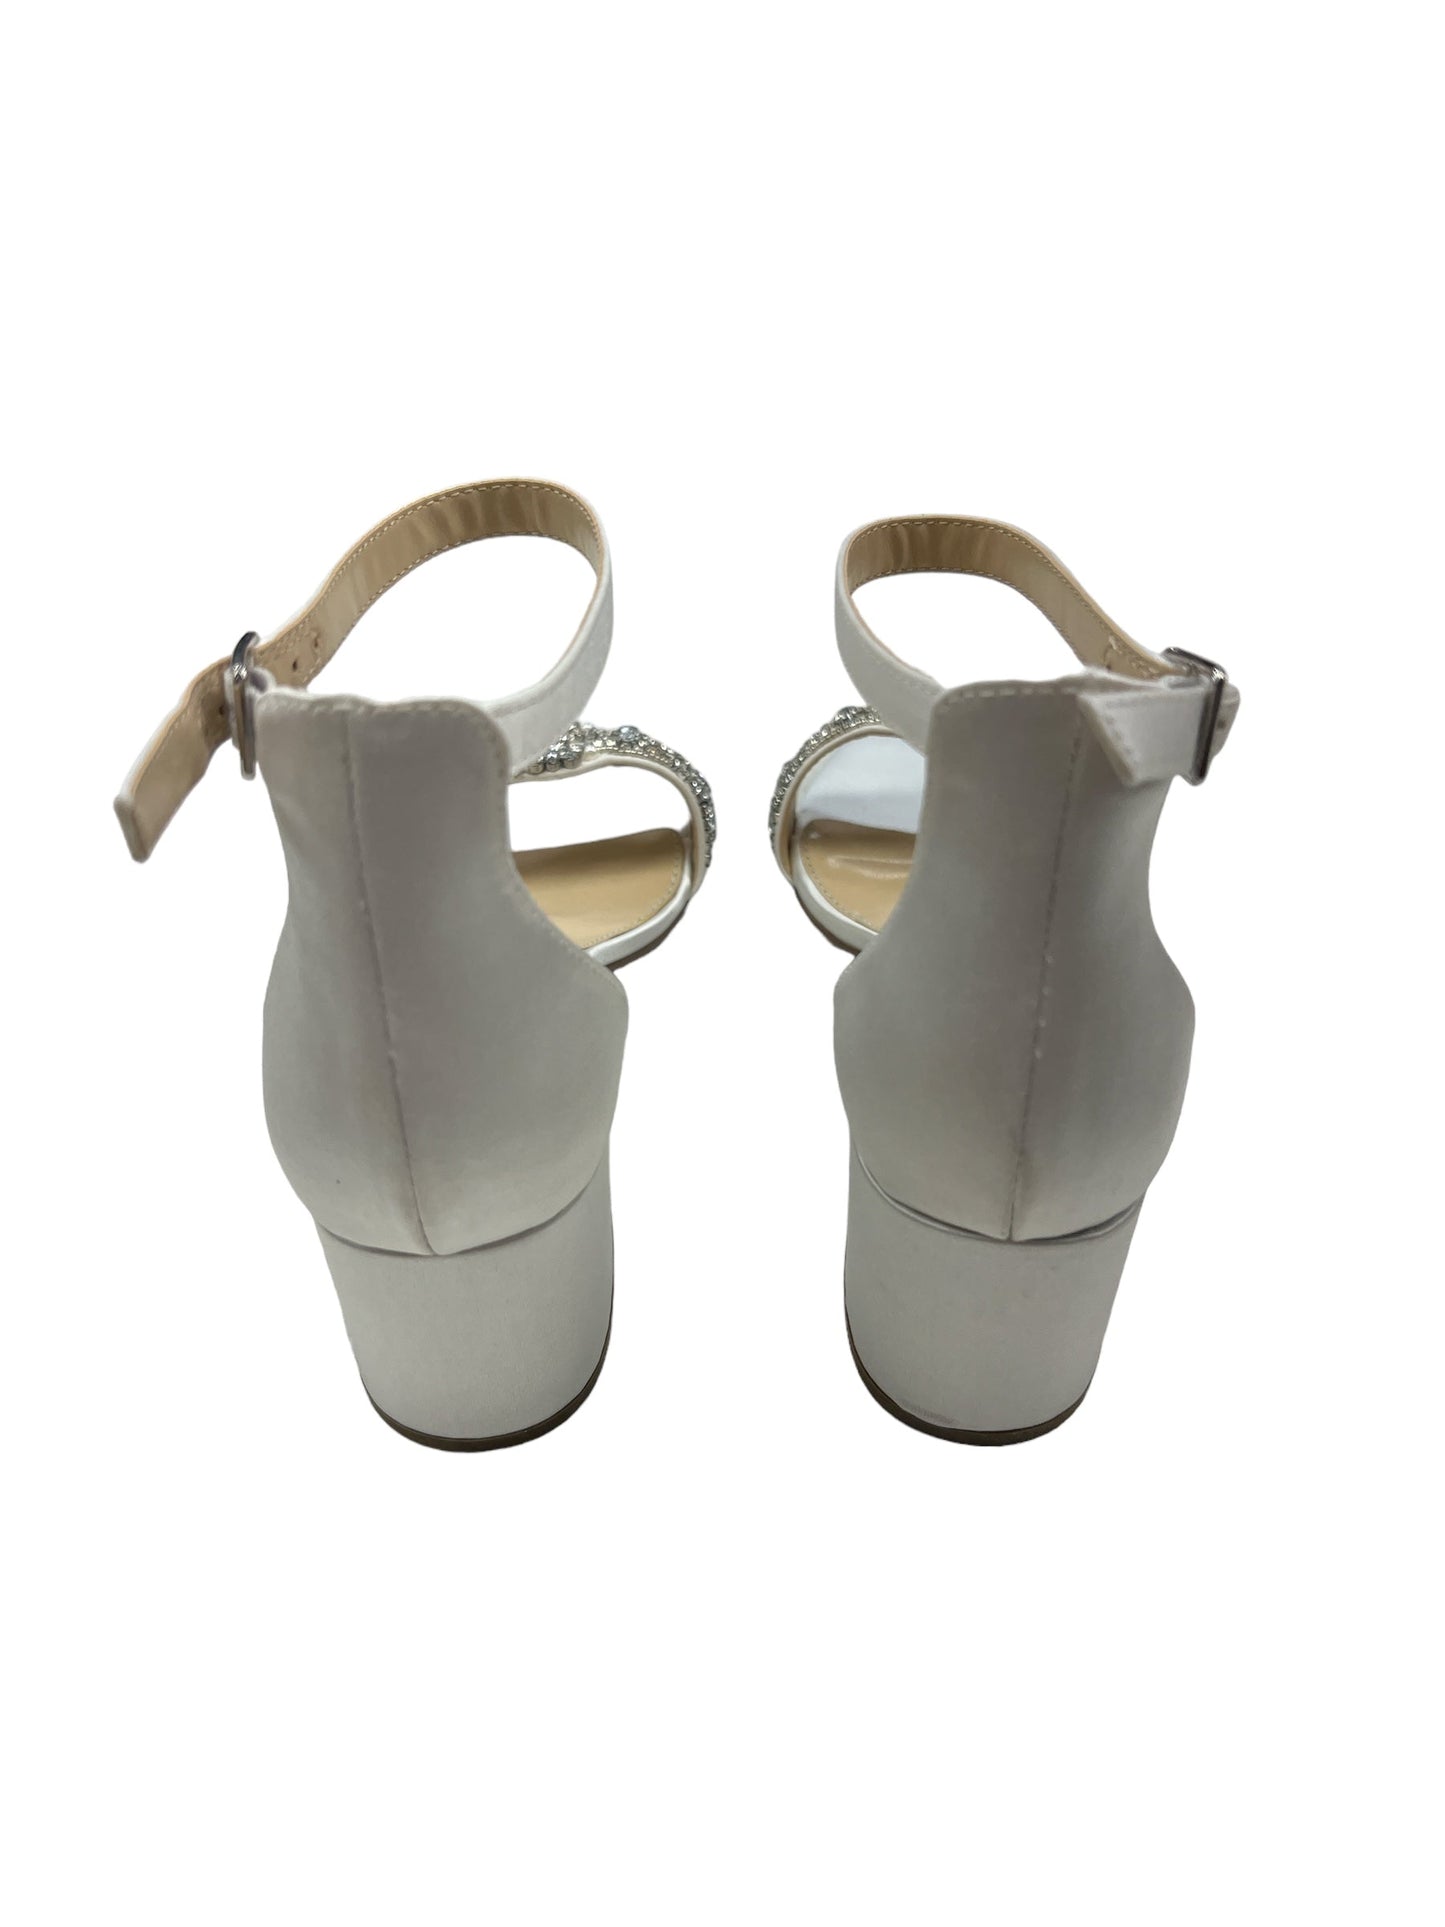 Ivory Shoes Heels Block Betsey Johnson, Size 7.5